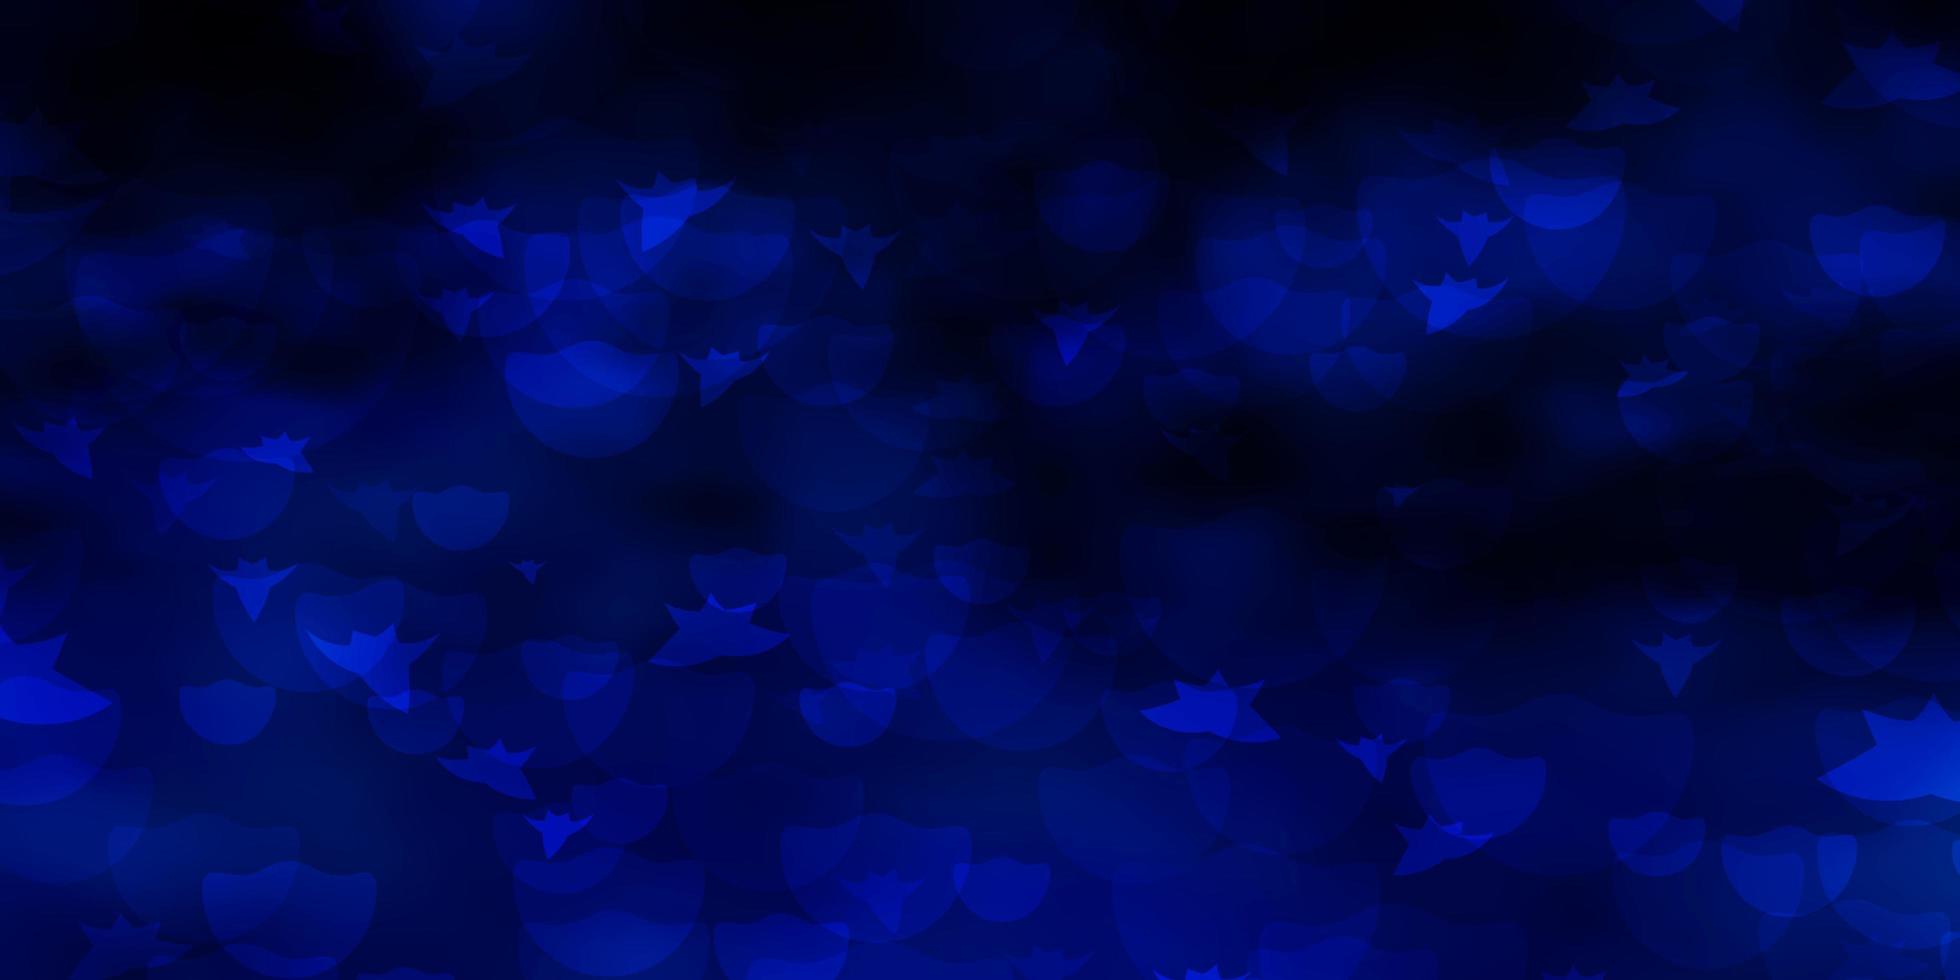 Dark BLUE vector layout with circles, stars.